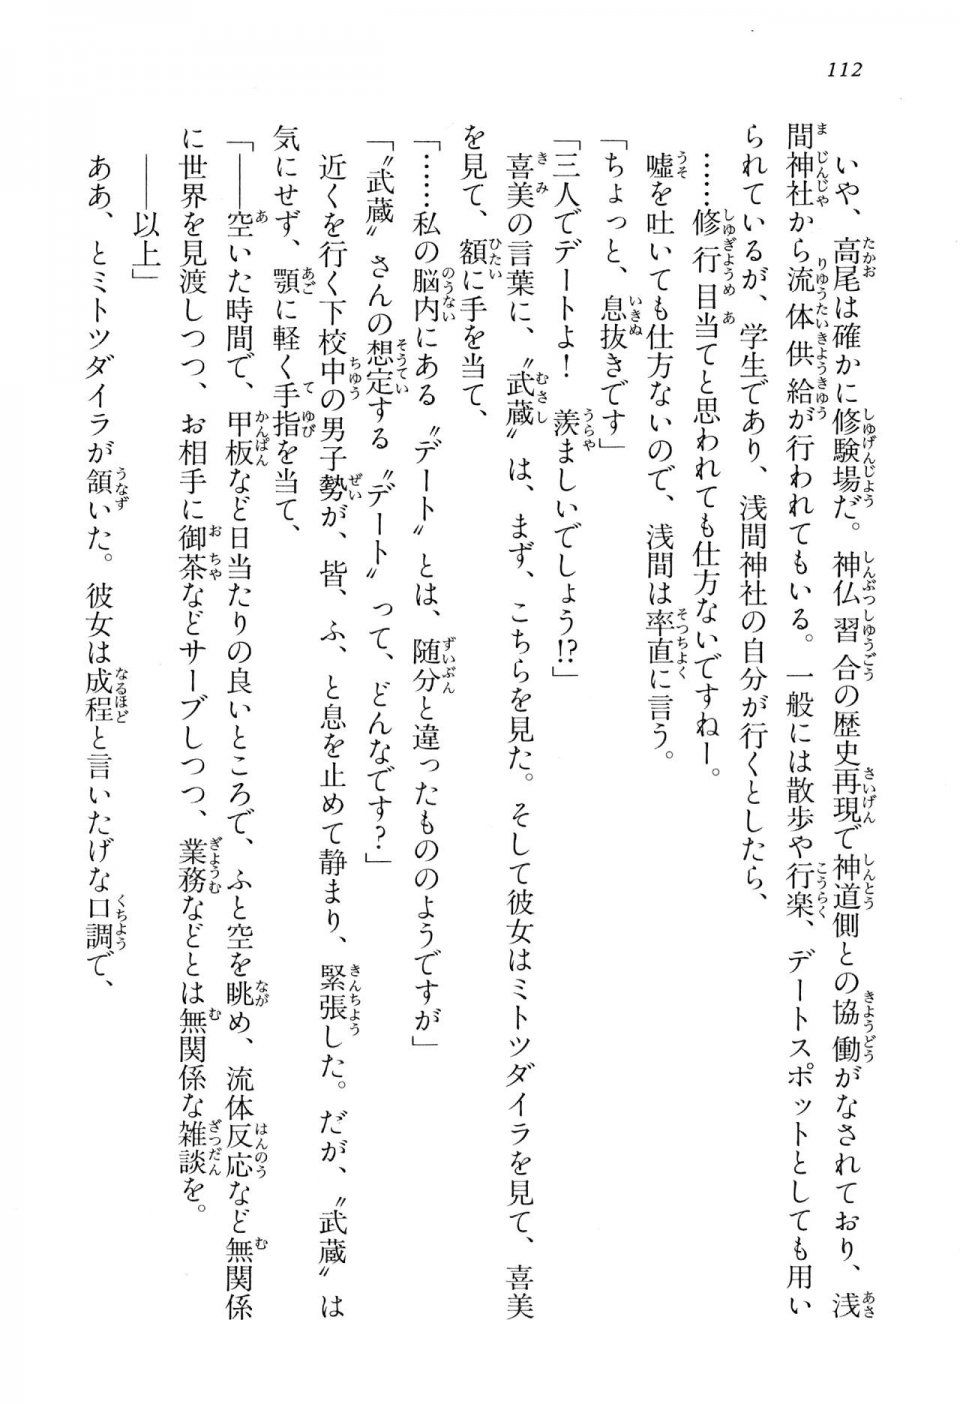 Kyoukai Senjou no Horizon BD Special Mininovel Vol 2(1B) - Photo #116